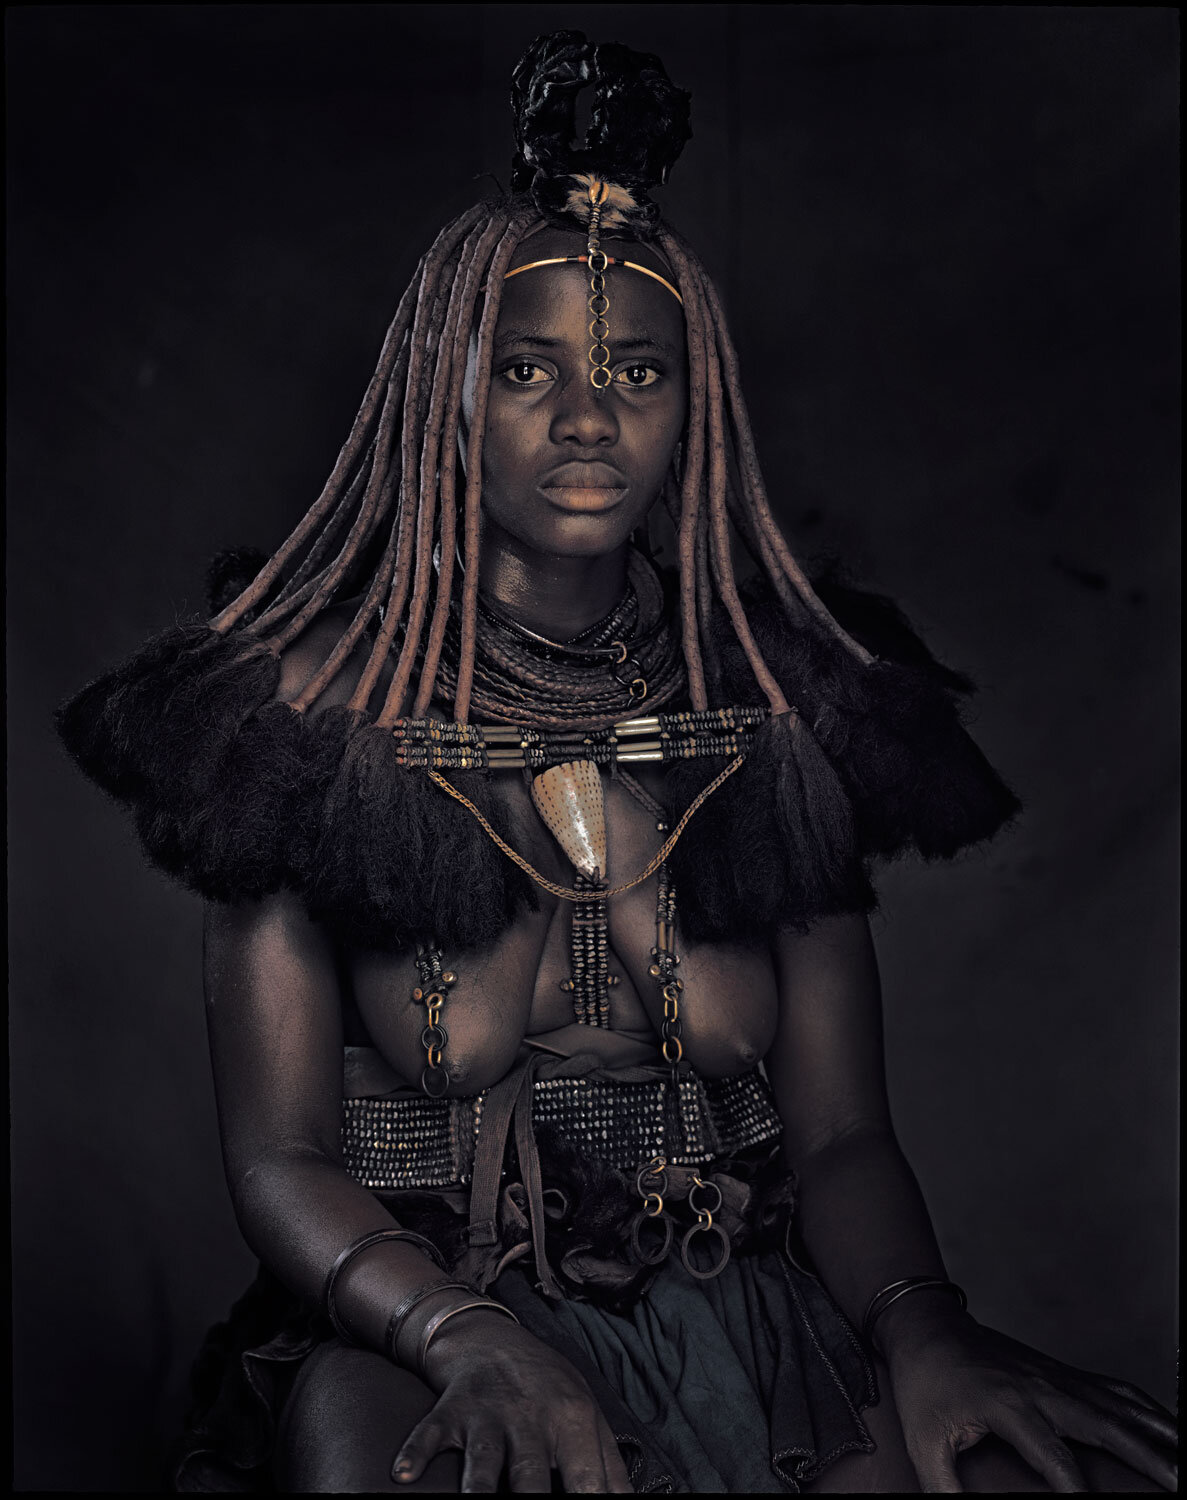 Himba_Matutjavi_Tjavara_Epupa_Falls_Jimmy_Nelson_December_2011.jpg